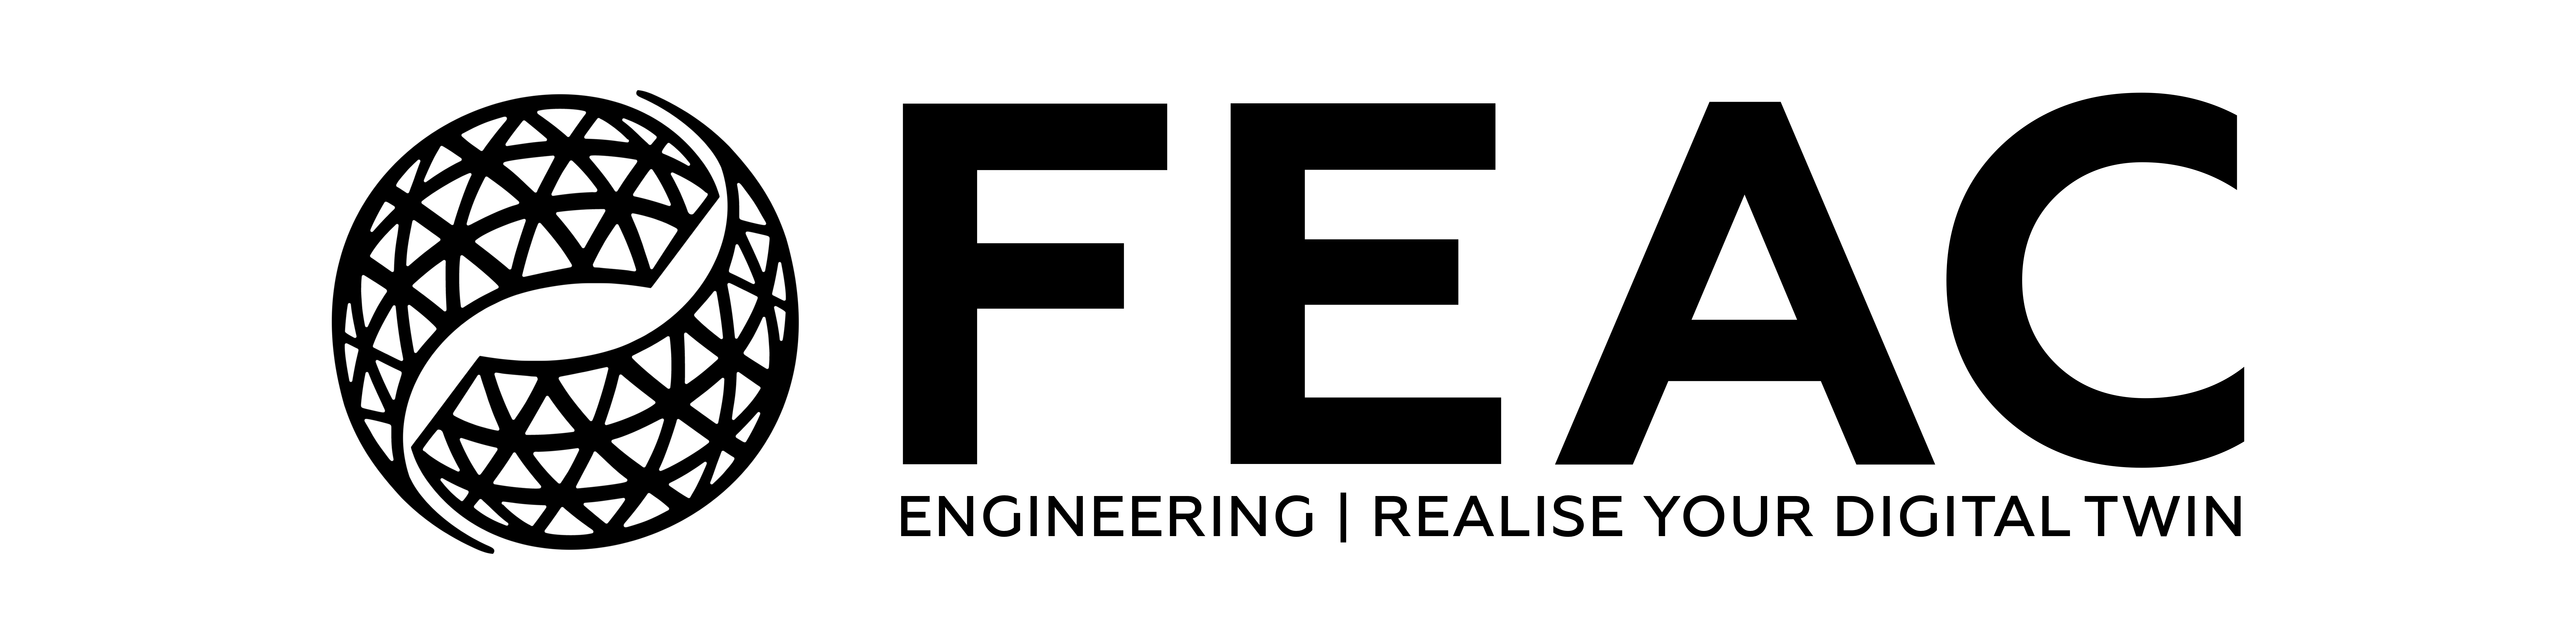 FEAC logo